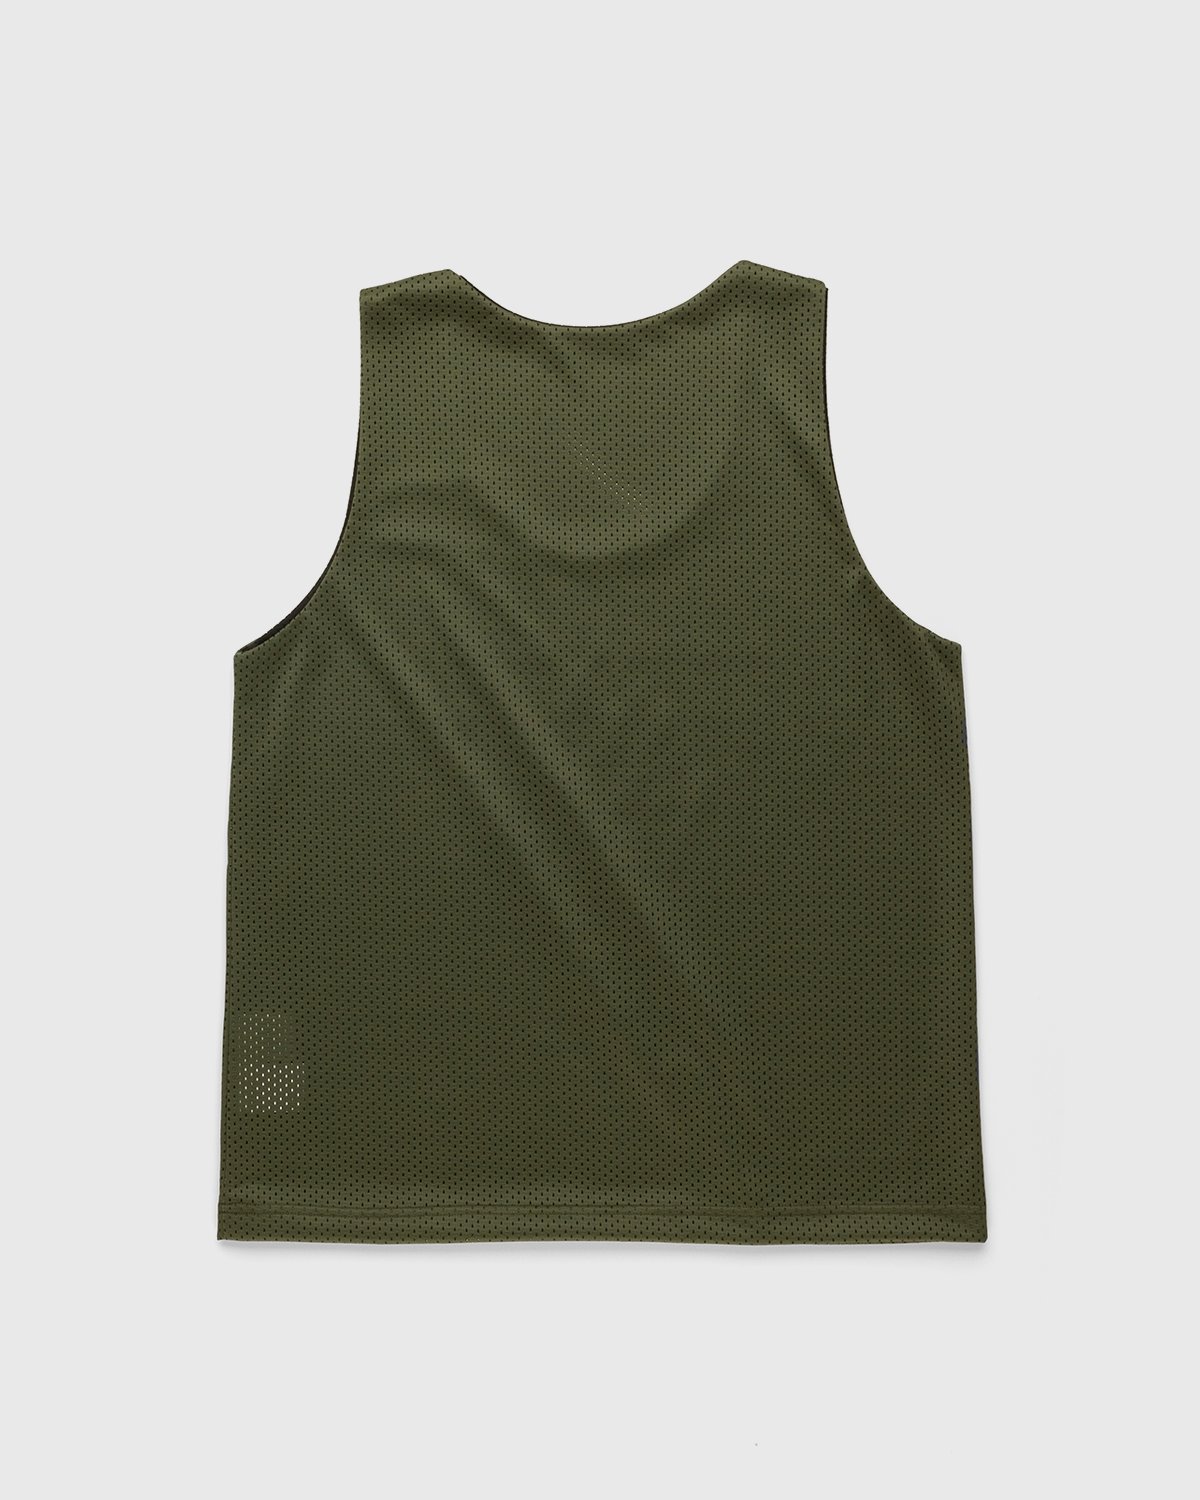 Highsnobiety - HS Sports Reversible Mesh Tank Top Black/Khaki - Clothing - Green - Image 2